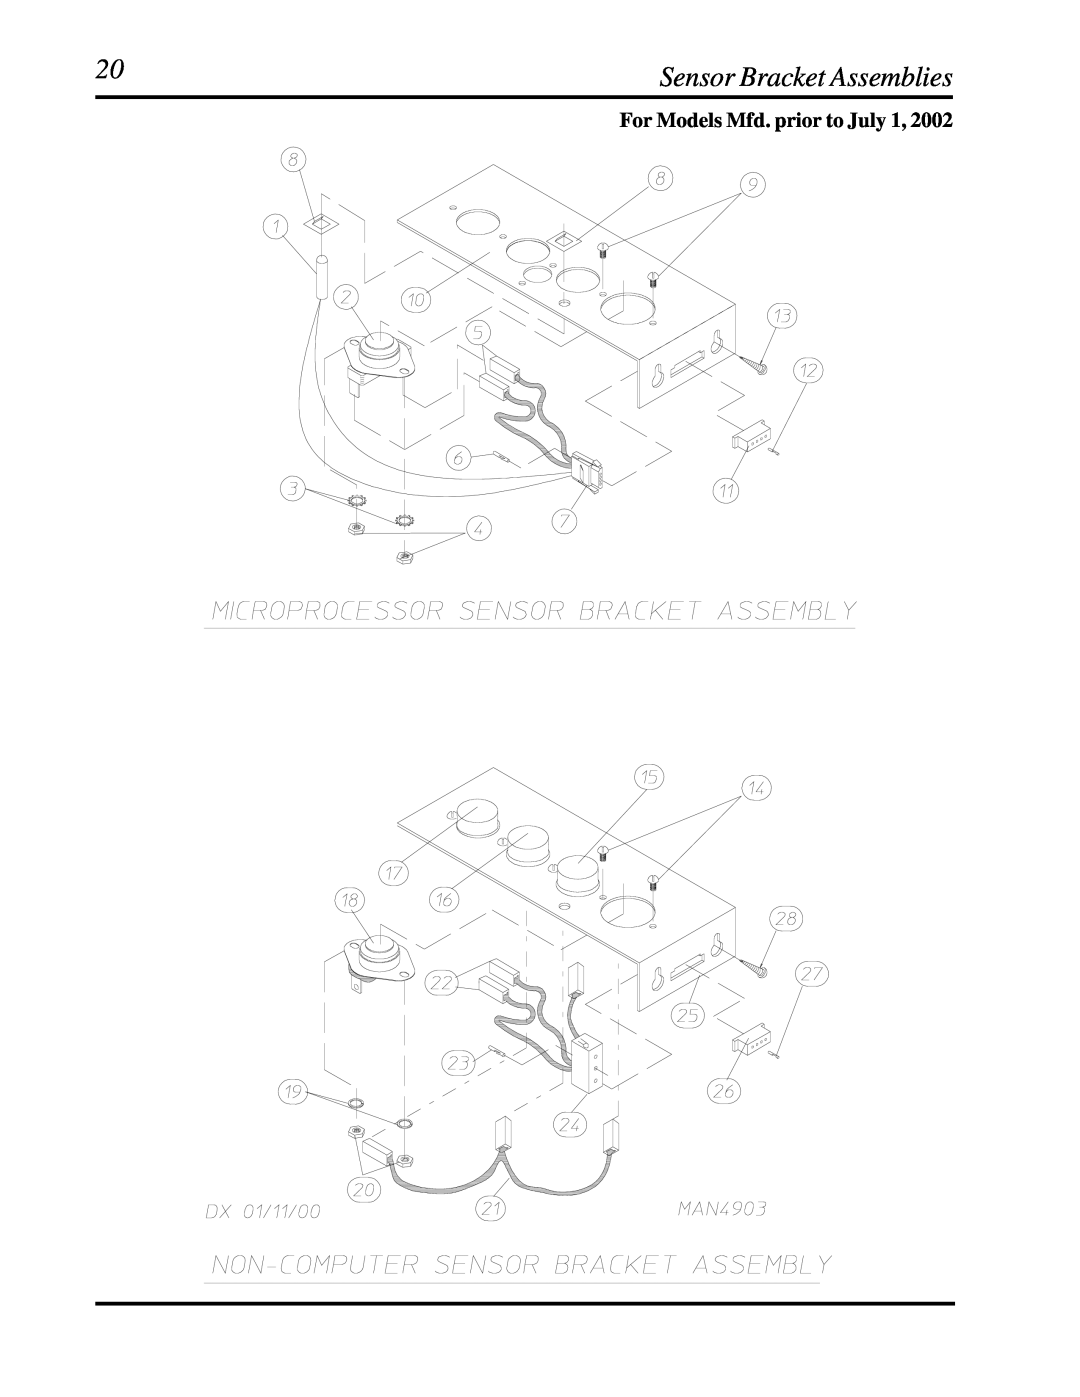 American Dryer Corp D30 manual Sensor Bracket Assemblies, For Models Mfd. prior to July 1 